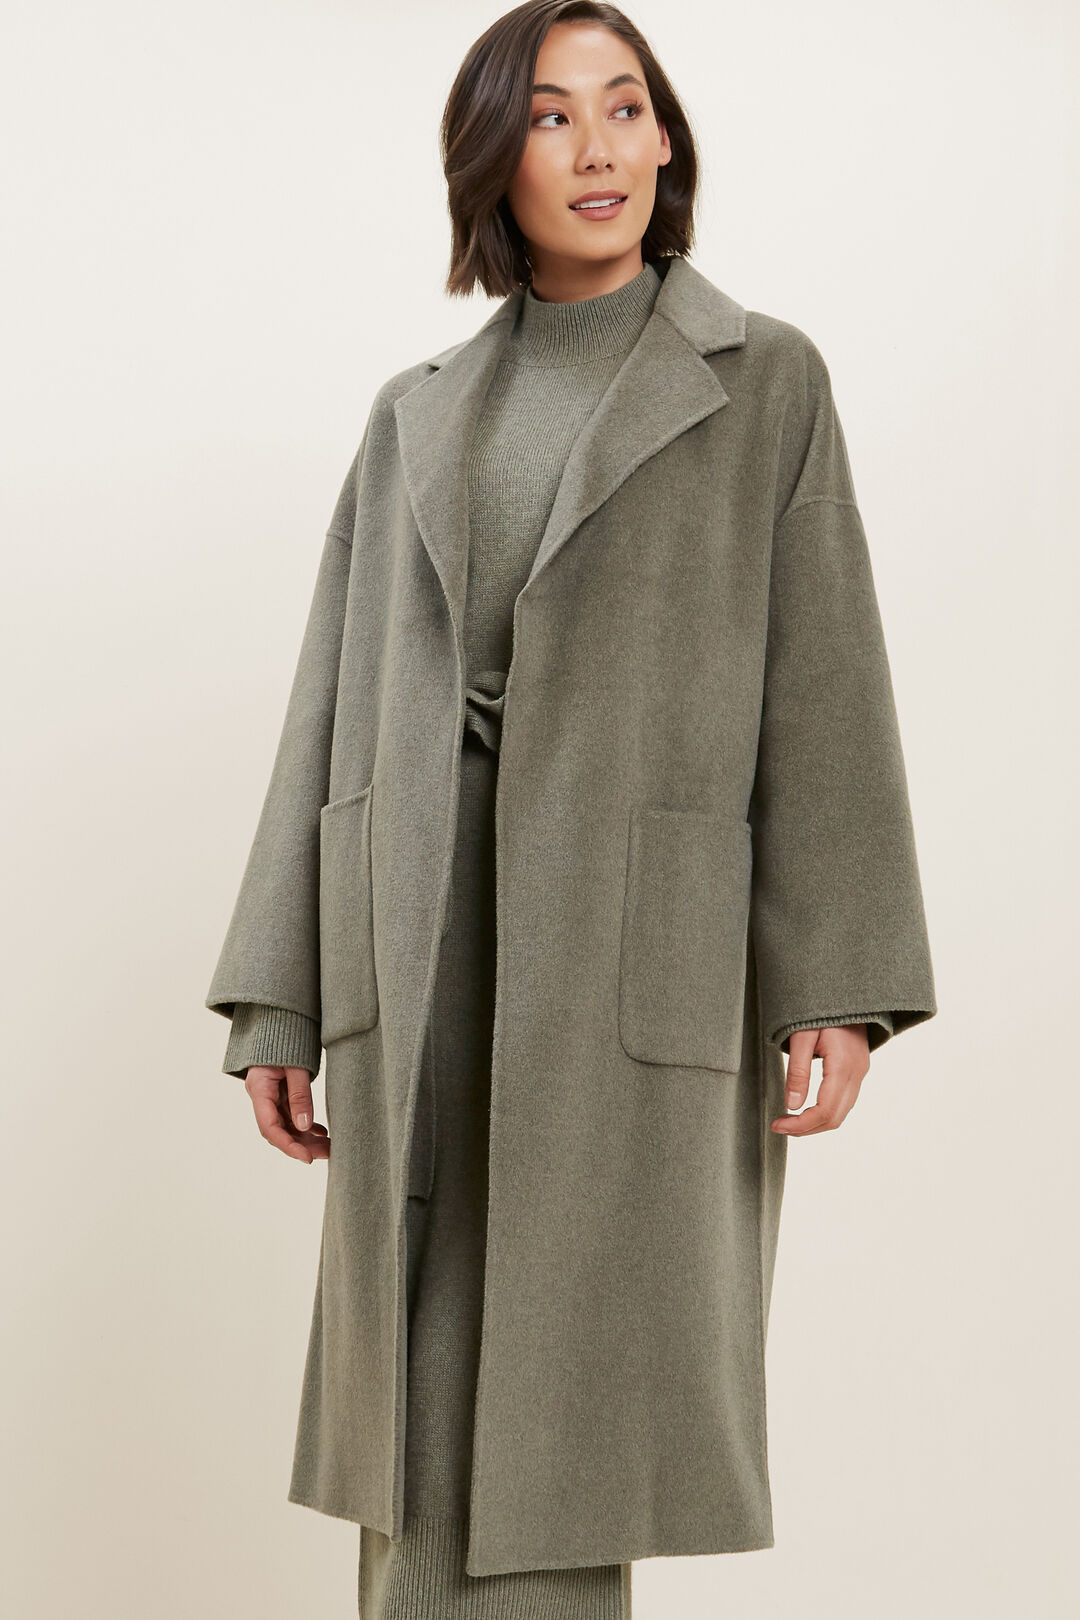 Wool Boyfriend Coat  Olive Khaki Marle  hi-res